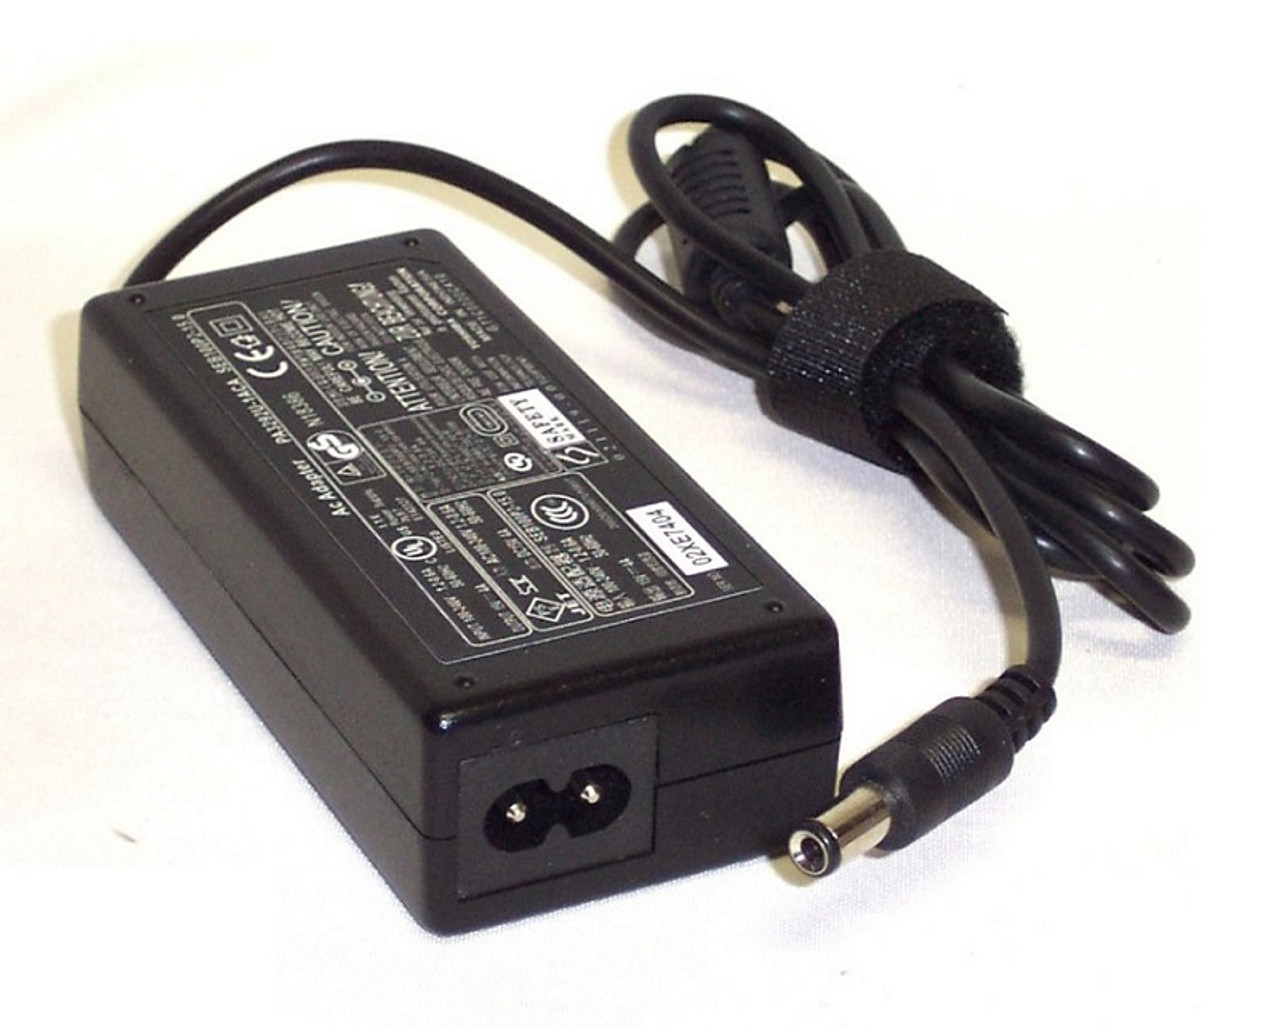 608425-001 - HP 65-Watts Smart-Pin AC Adapter